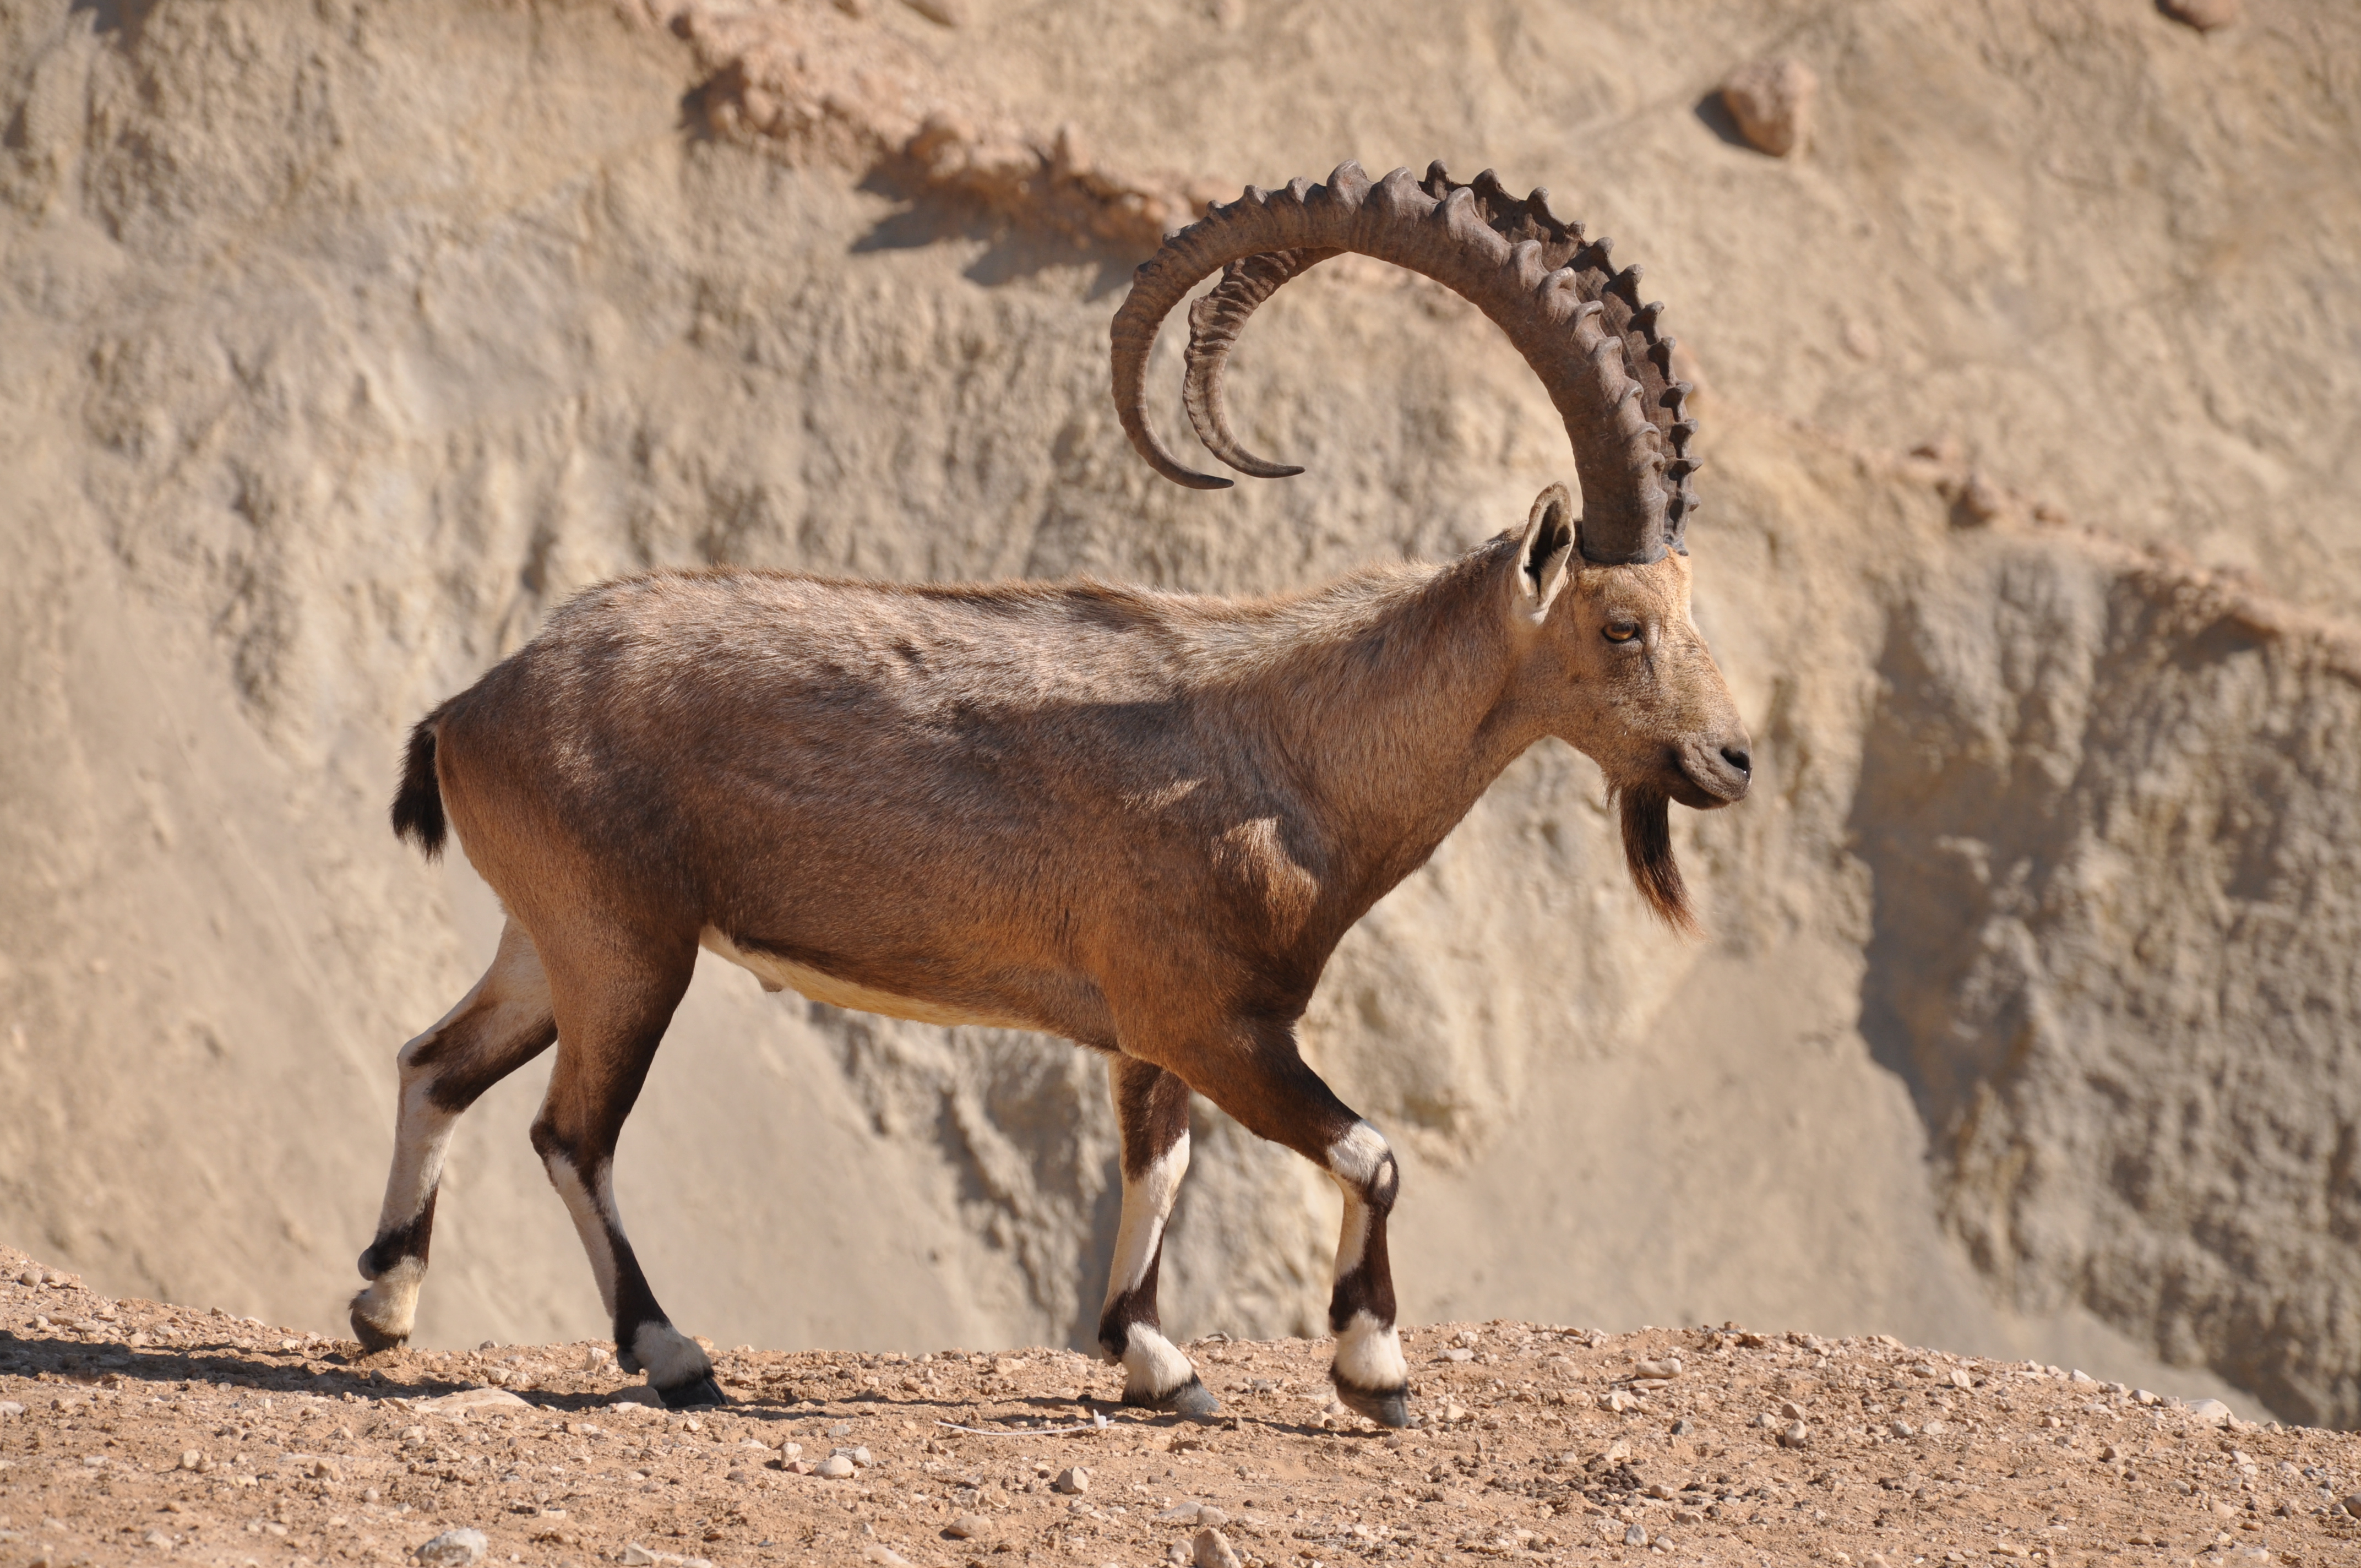 Nubian ibex - Wikipedia